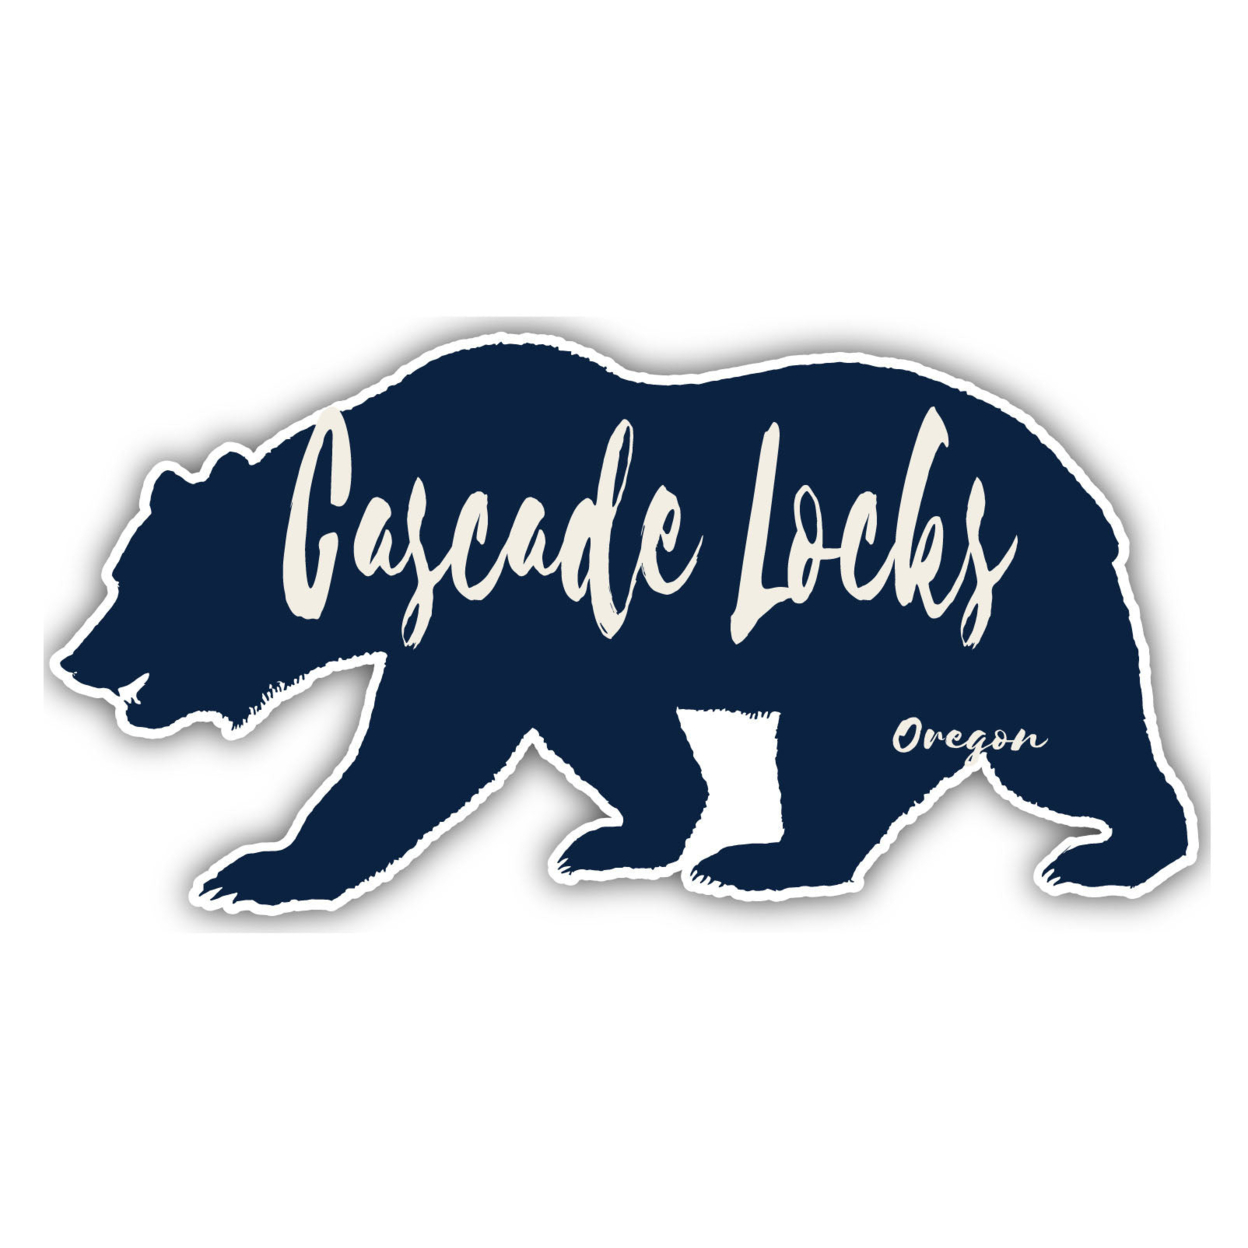 Cascade Locks Oregon Souvenir Decorative Stickers (Choose Theme And Size) - 4-Pack, 10-Inch, Tent